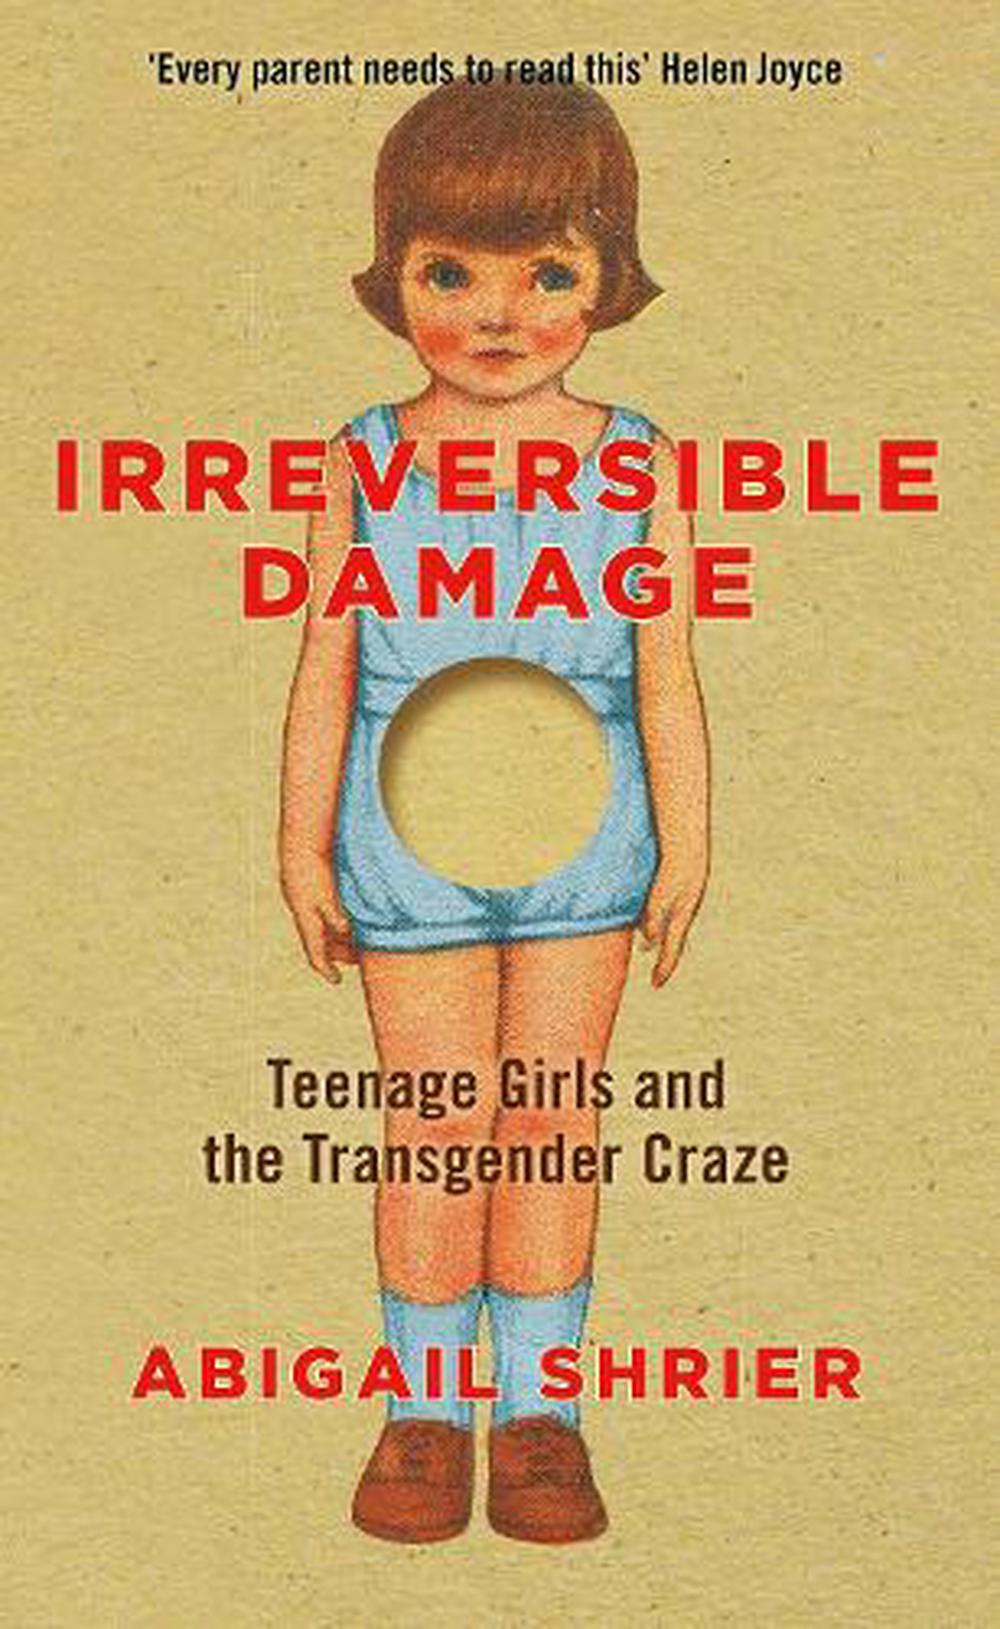 Irreversible Damage by Abigail Shrier, Hardcover, 9781800750340 Buy